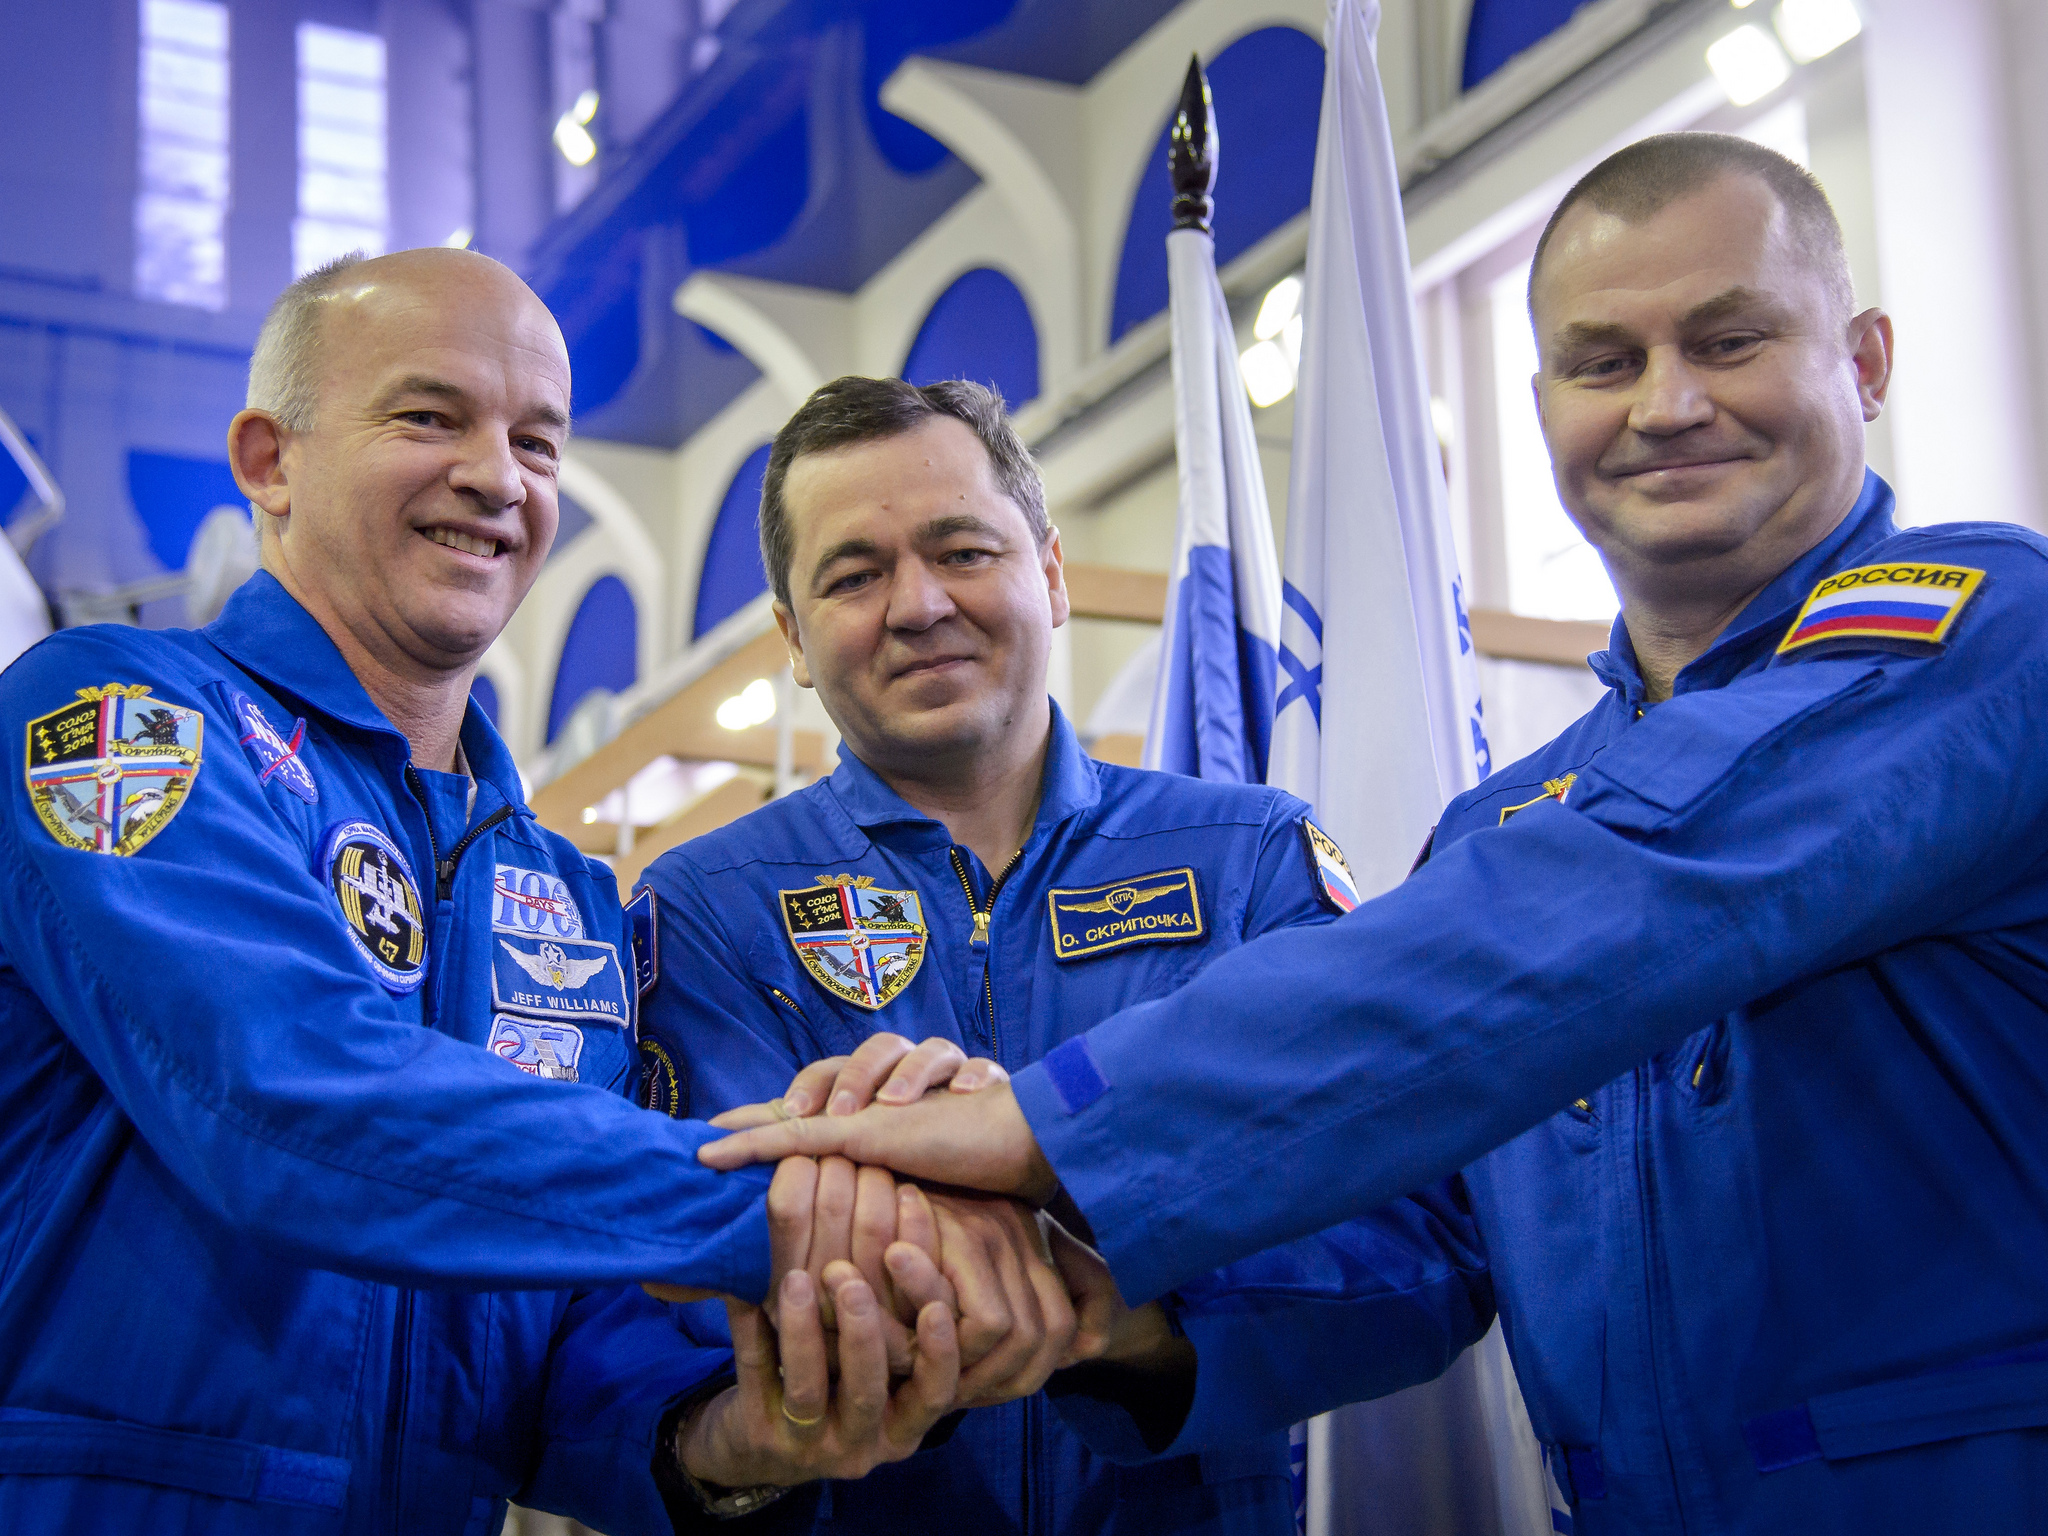 NASA astronaut Jeff Williams, and cosmonauts Oleg Skripochka and Alexei Ovchinin of the Russian space agency Roscosmos